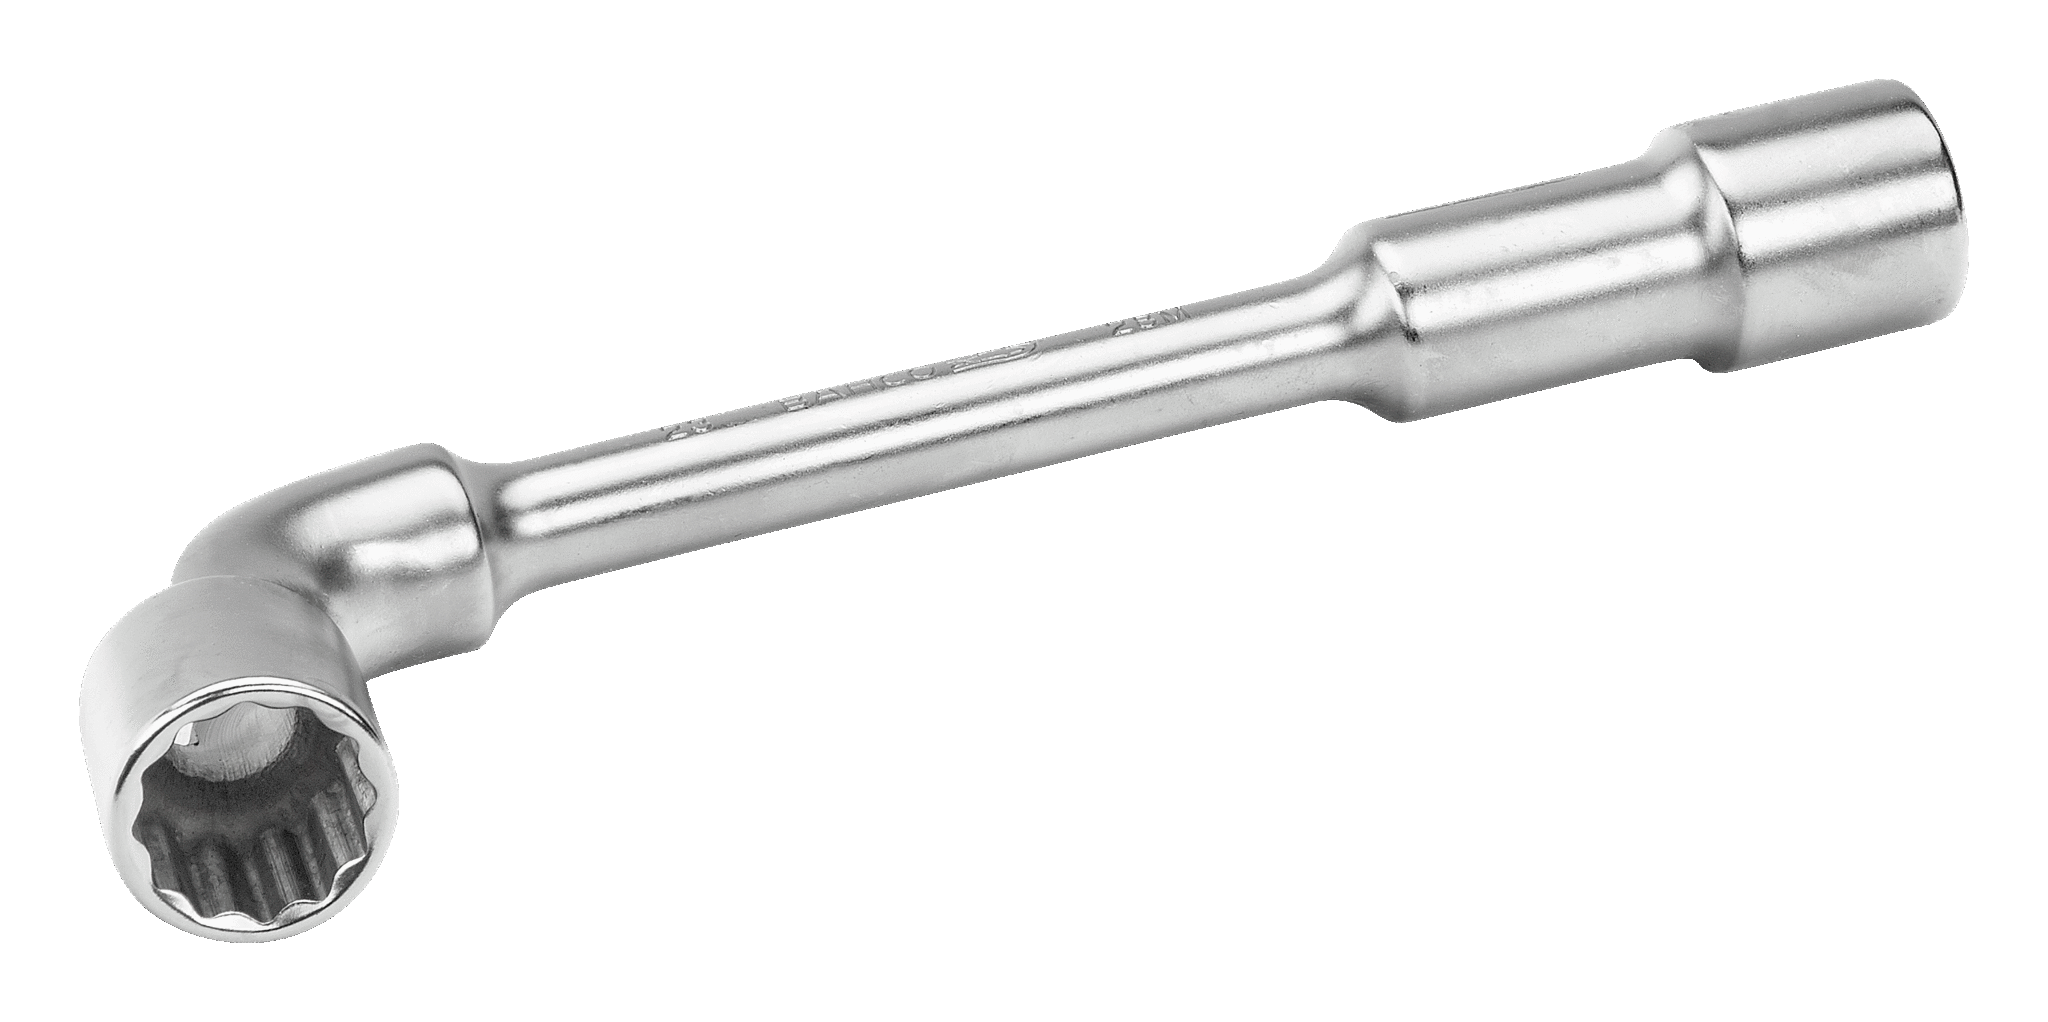 10mm metric L-shaped 6-point hexagonal socket wrench 